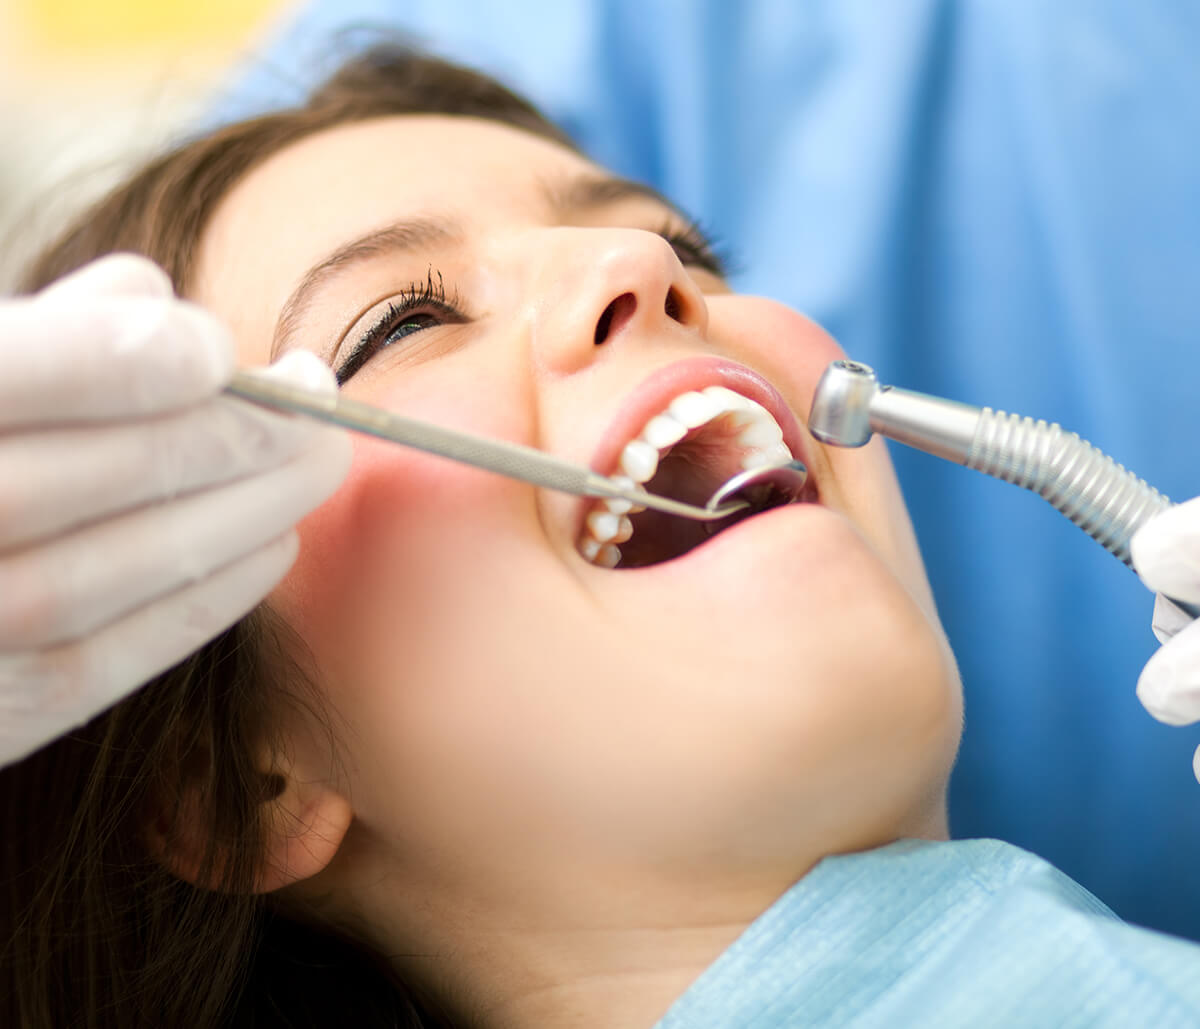 How Safe Are Dental Implants?